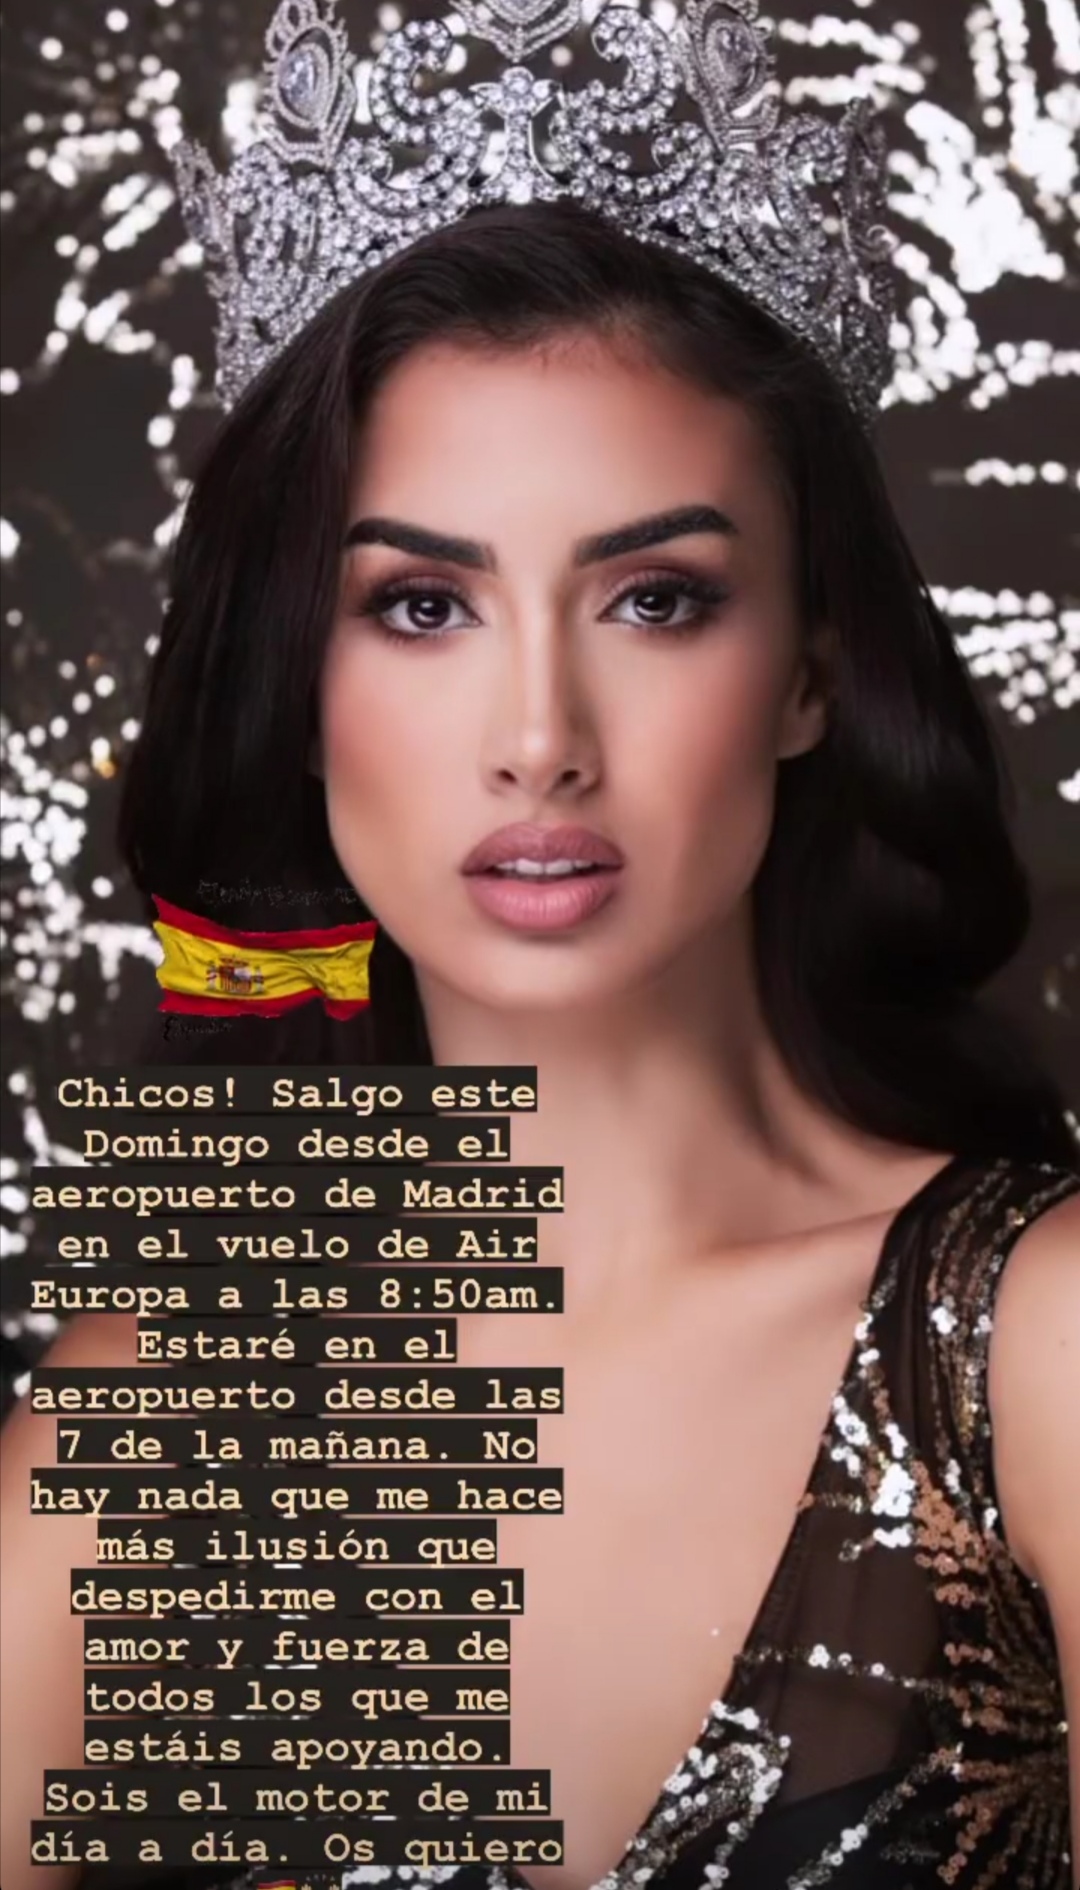 sarah loinaz, miss universe spain 2021/quinta finalista de reyna hispanoamericana 2016. - Página 5 Screen50